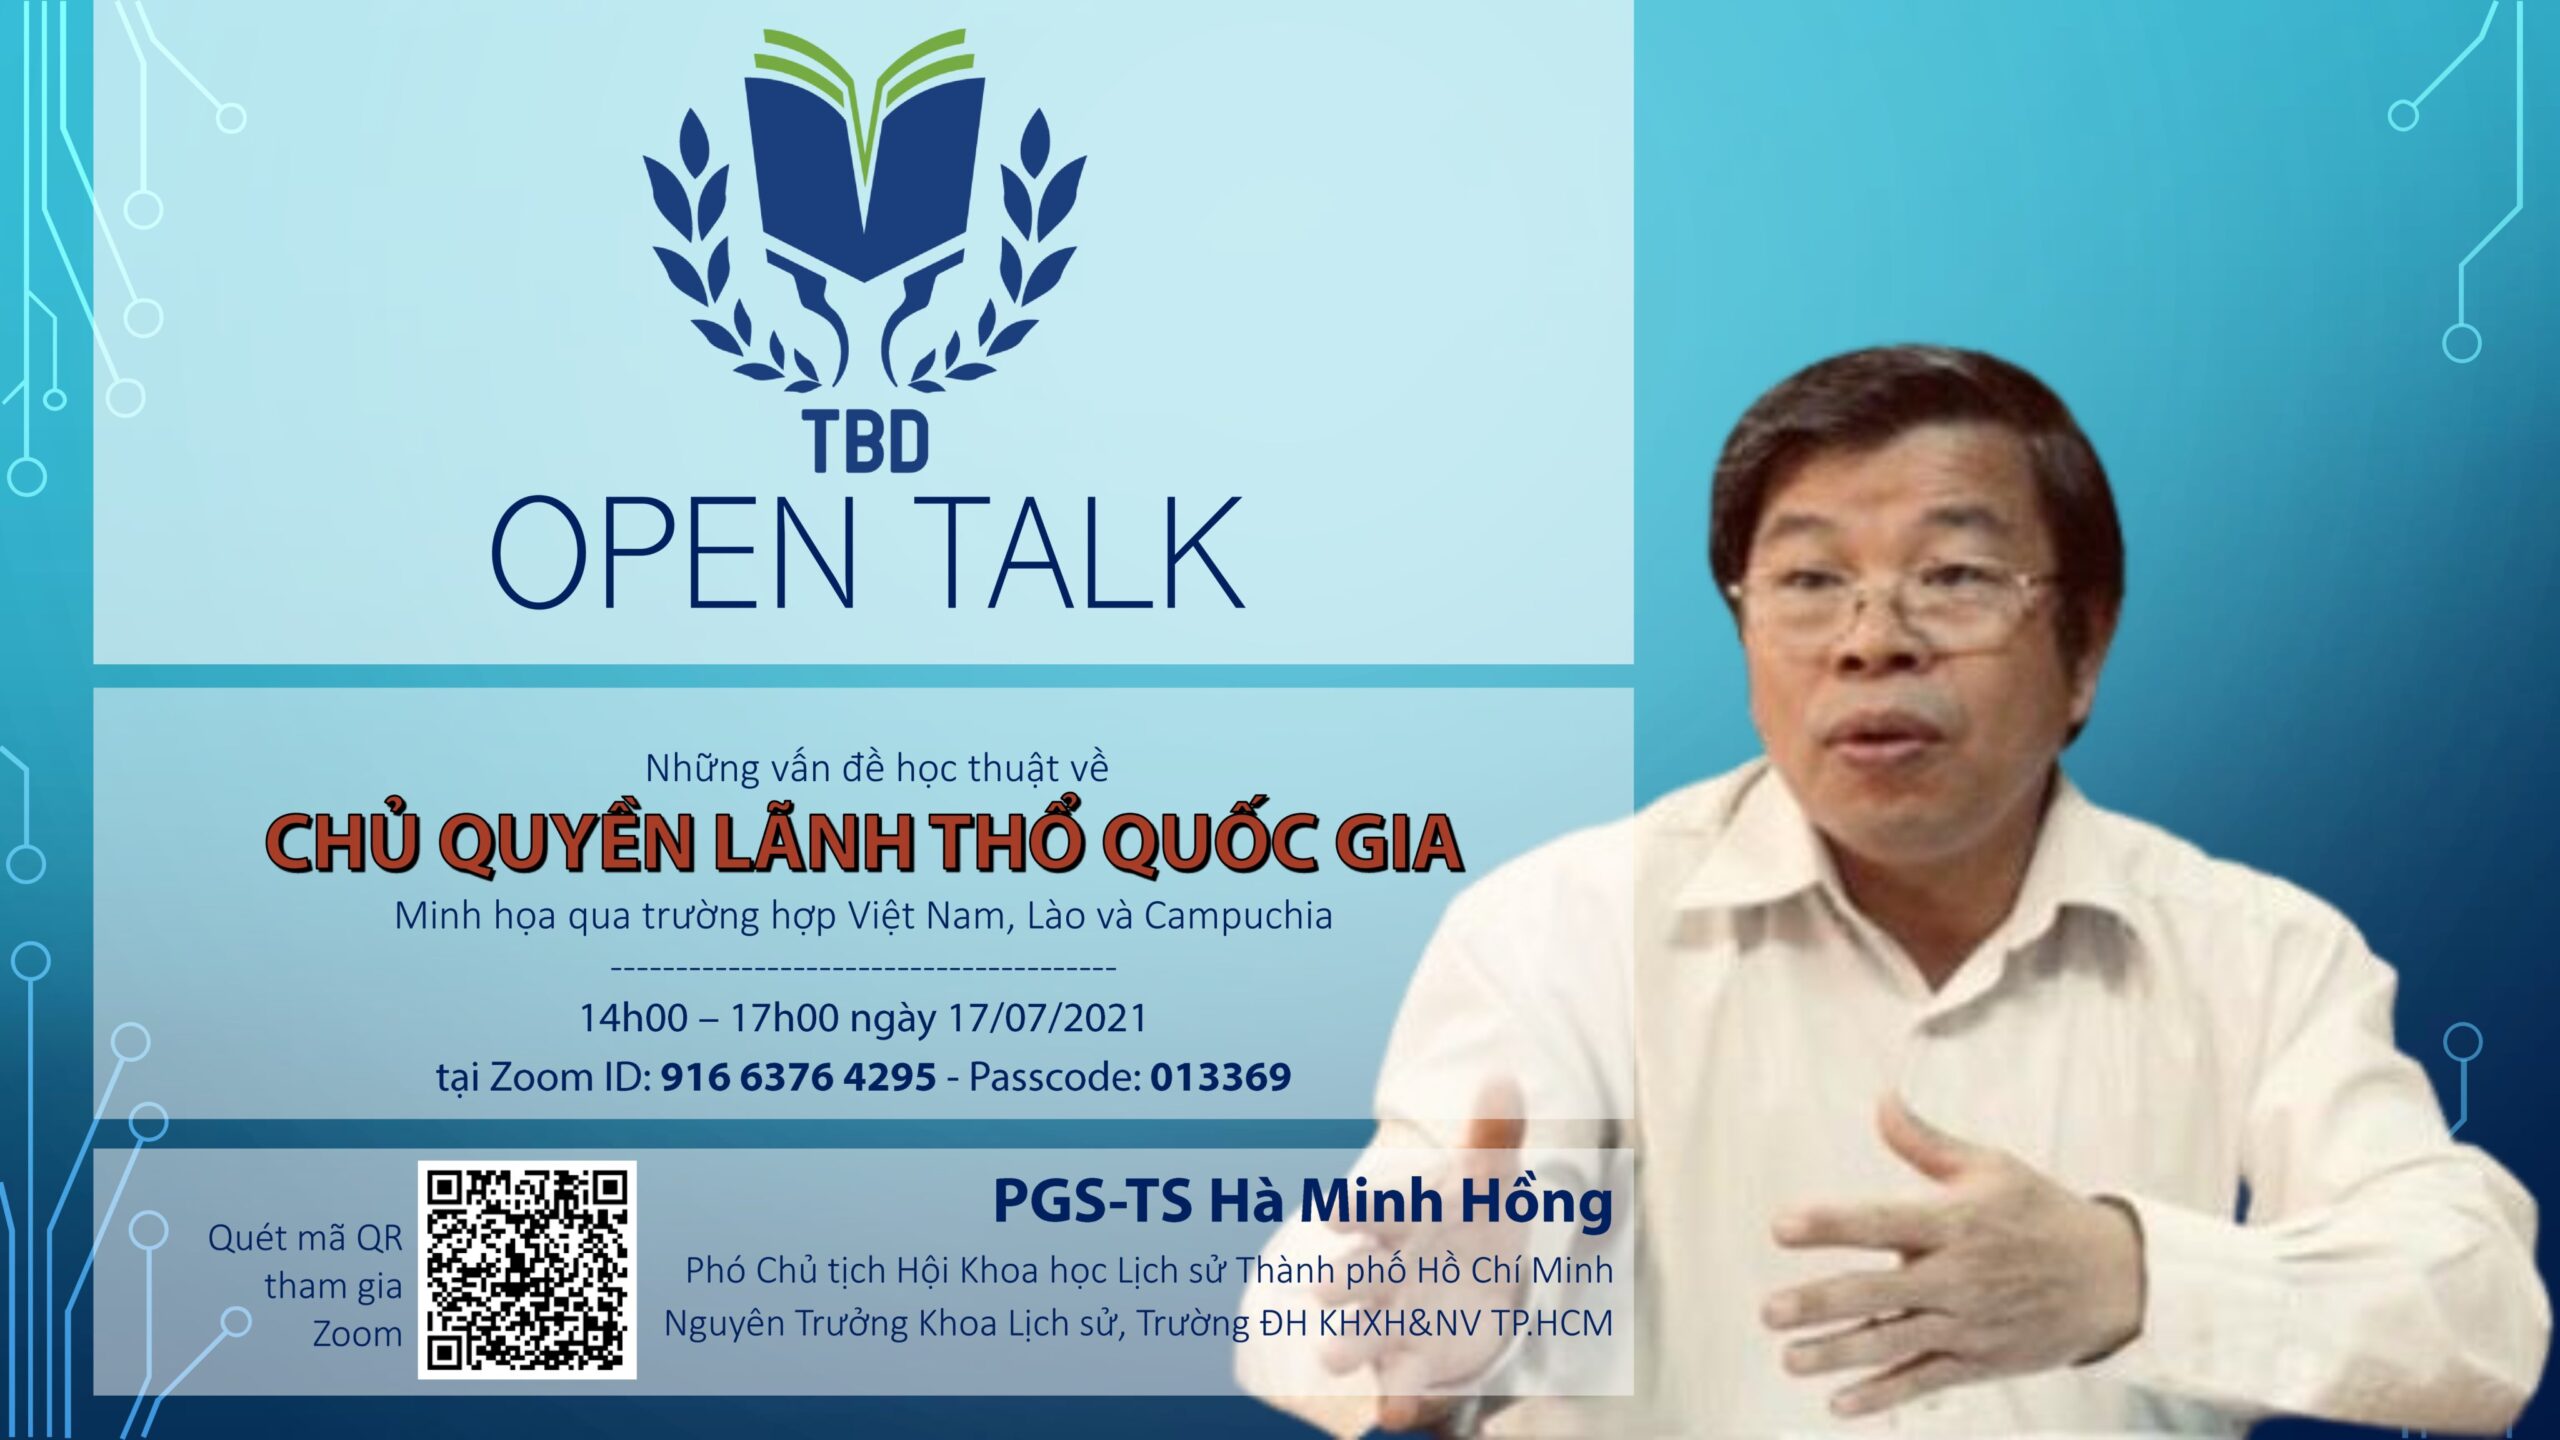 TBD Open talk